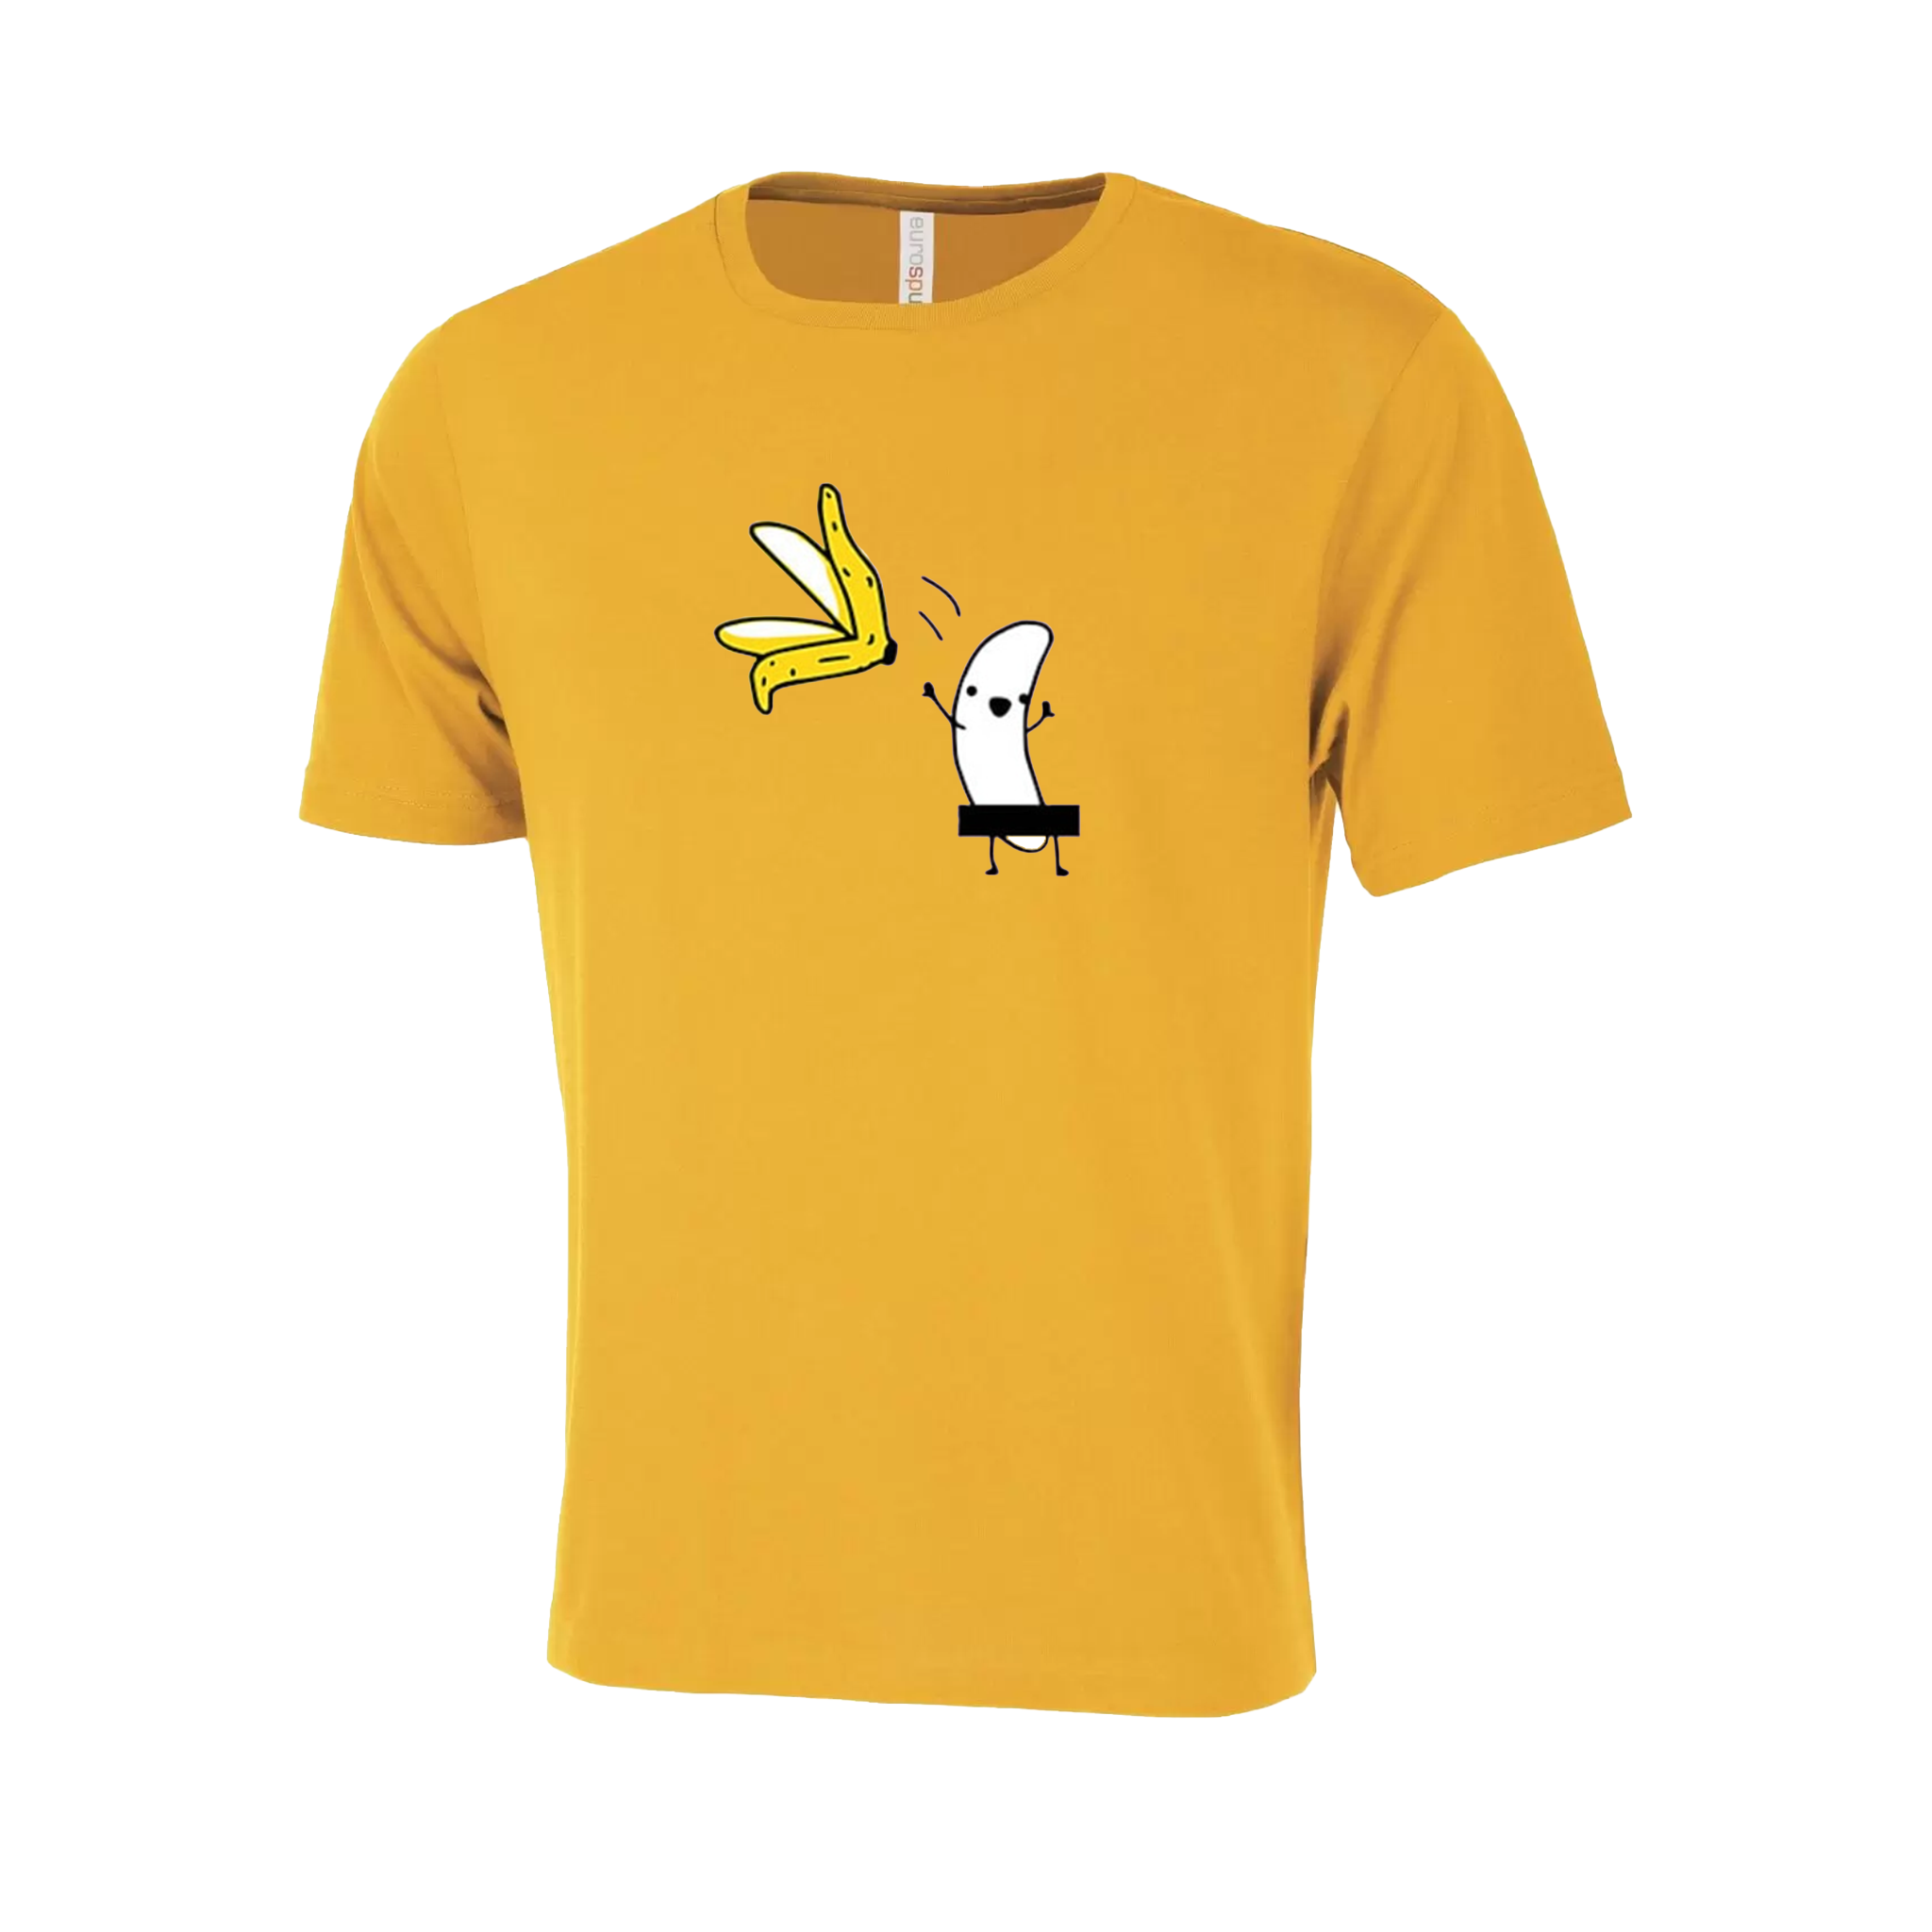 Stripped Banana Novelty T-Shirt - Adult Unisex Sizing XS-4XL - Gold